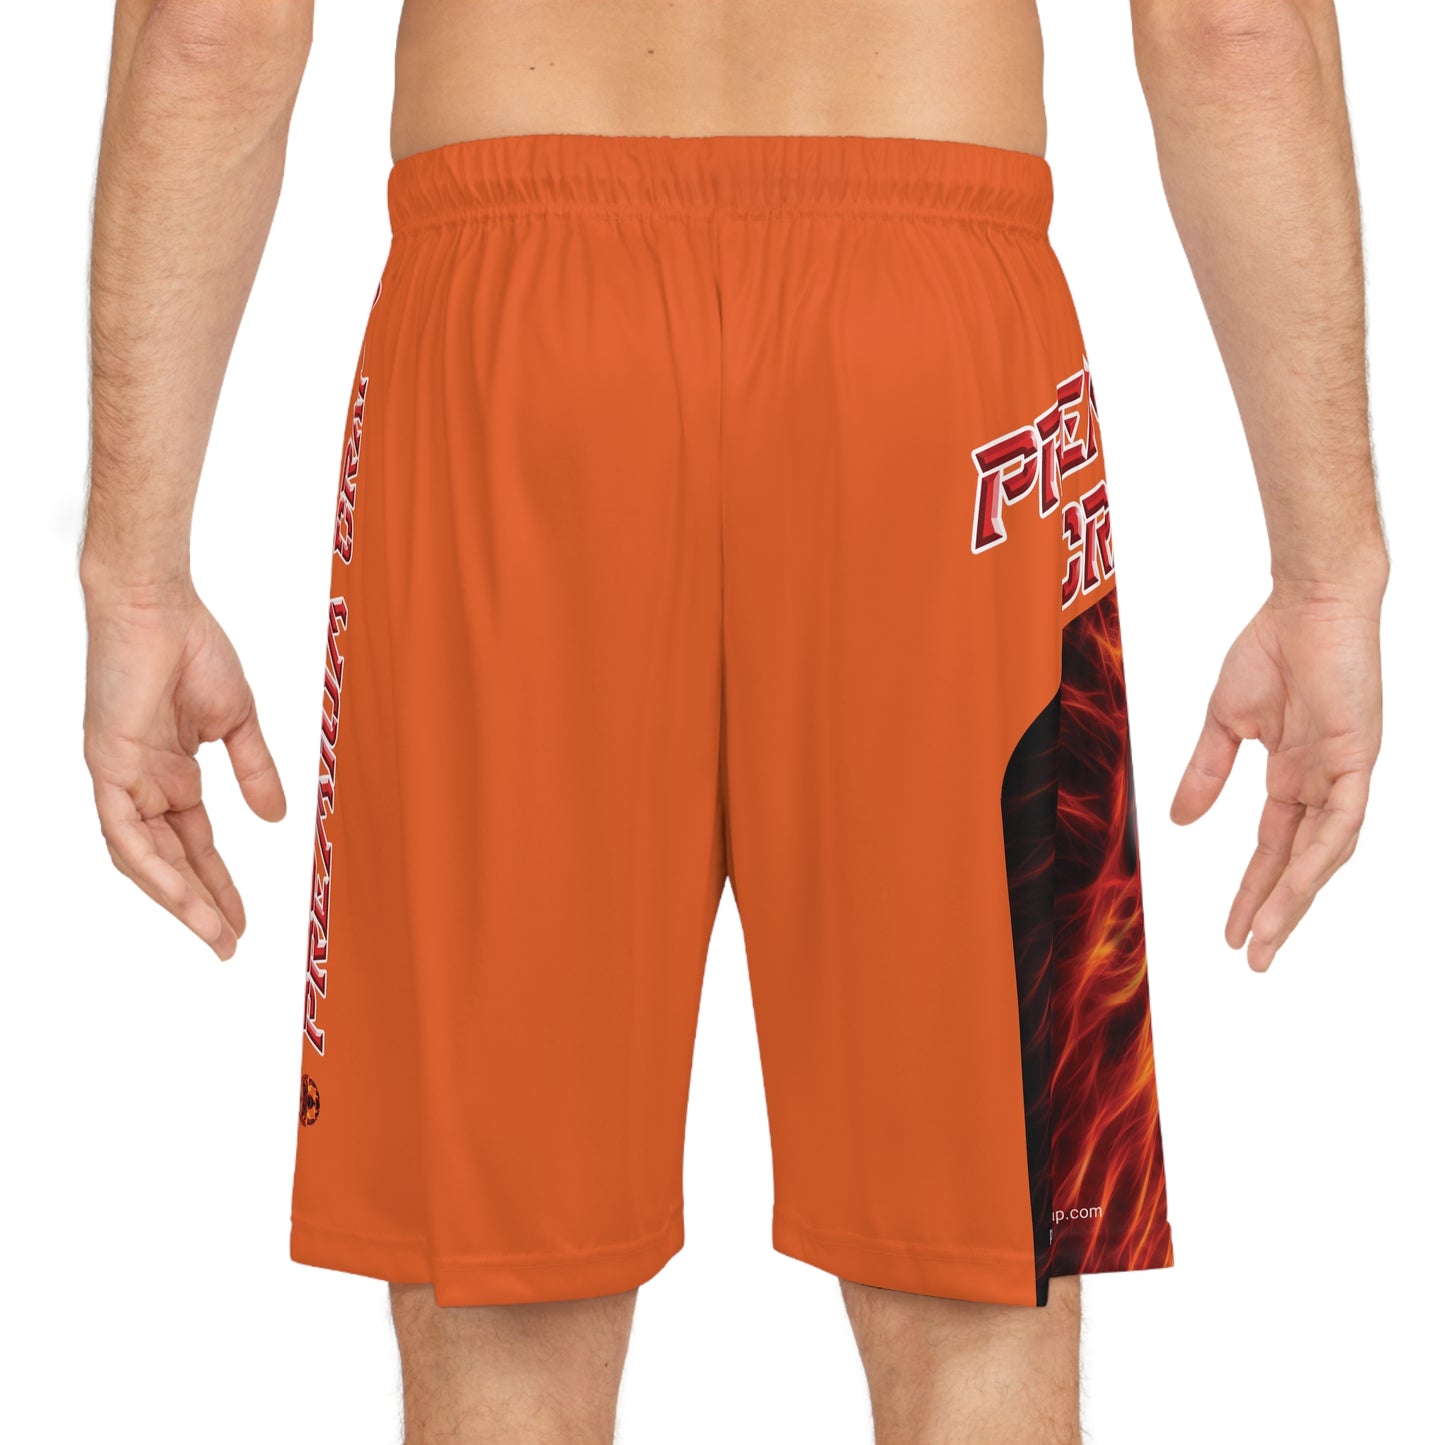 Premium Crap BougieBooty Baller Shorts - Orange